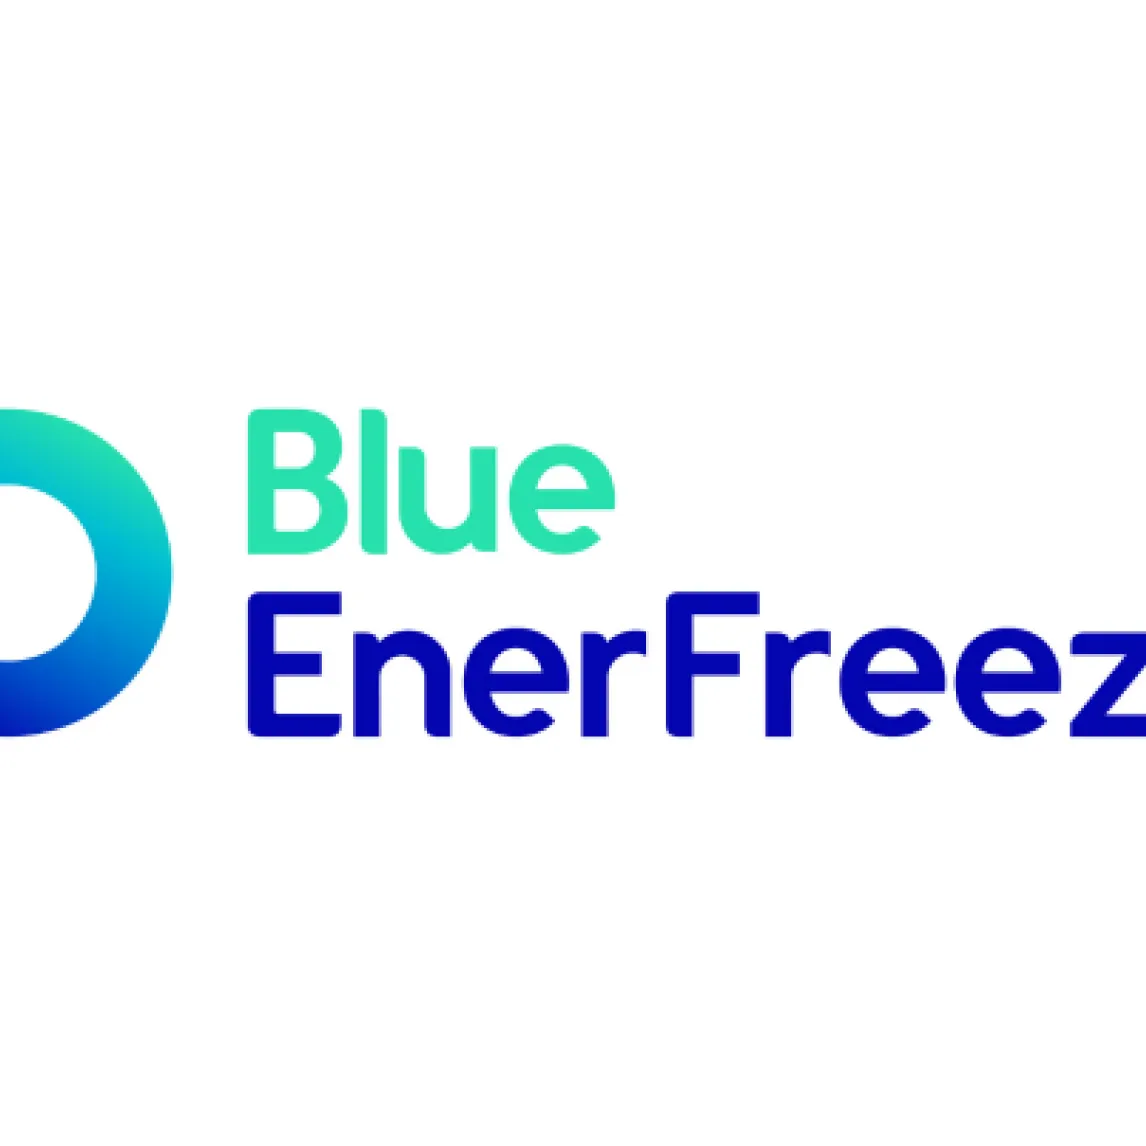 blueenerfreeze